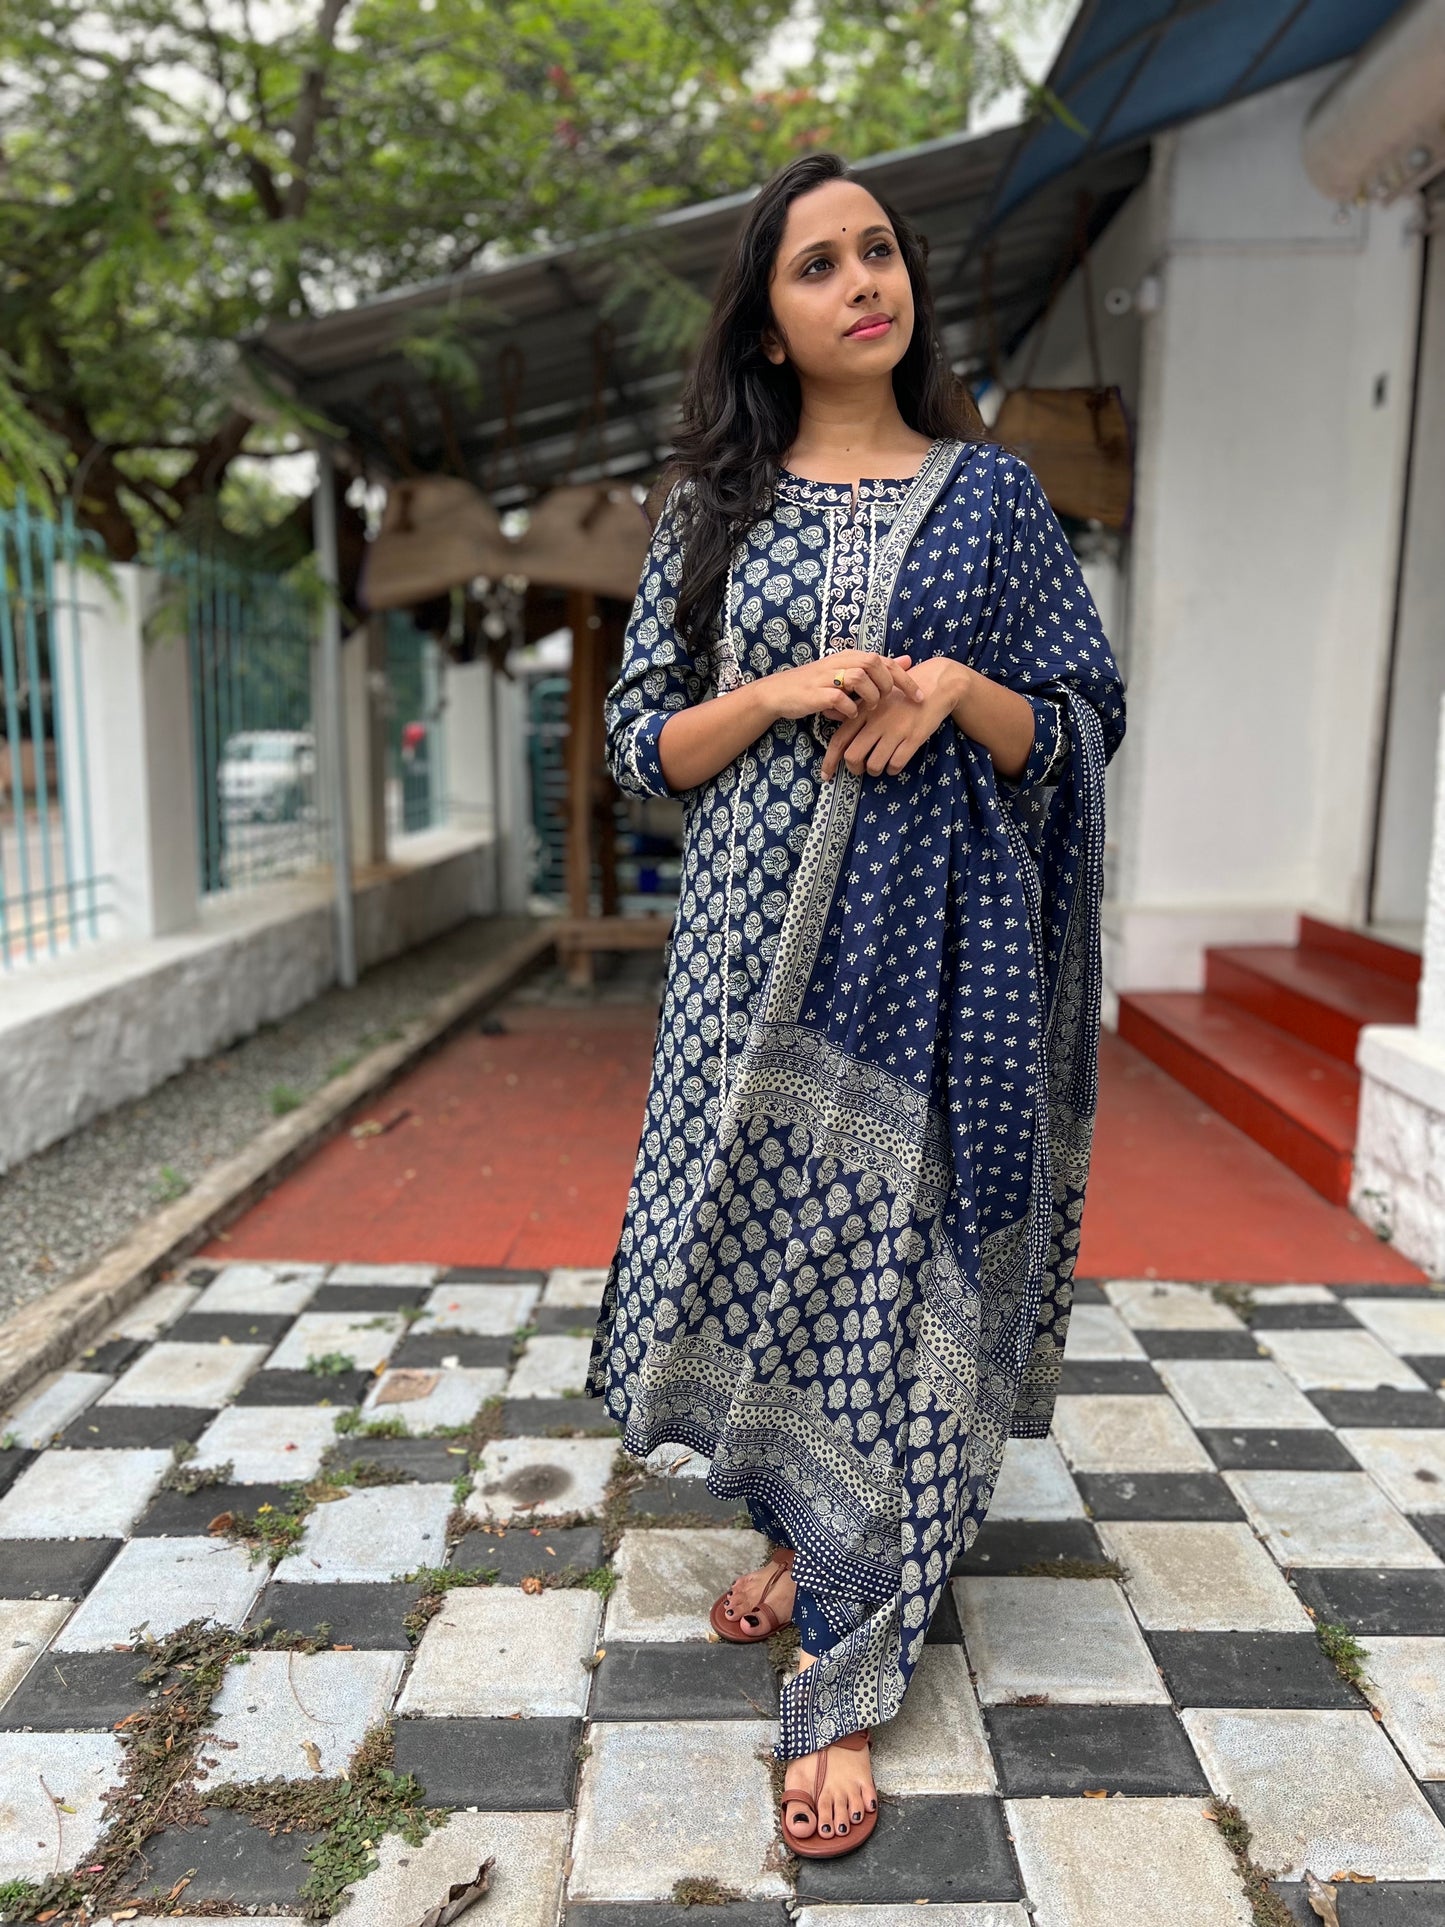 Southloom Stitched Cotton Salwar Set in Dark Blue with Floral Prints